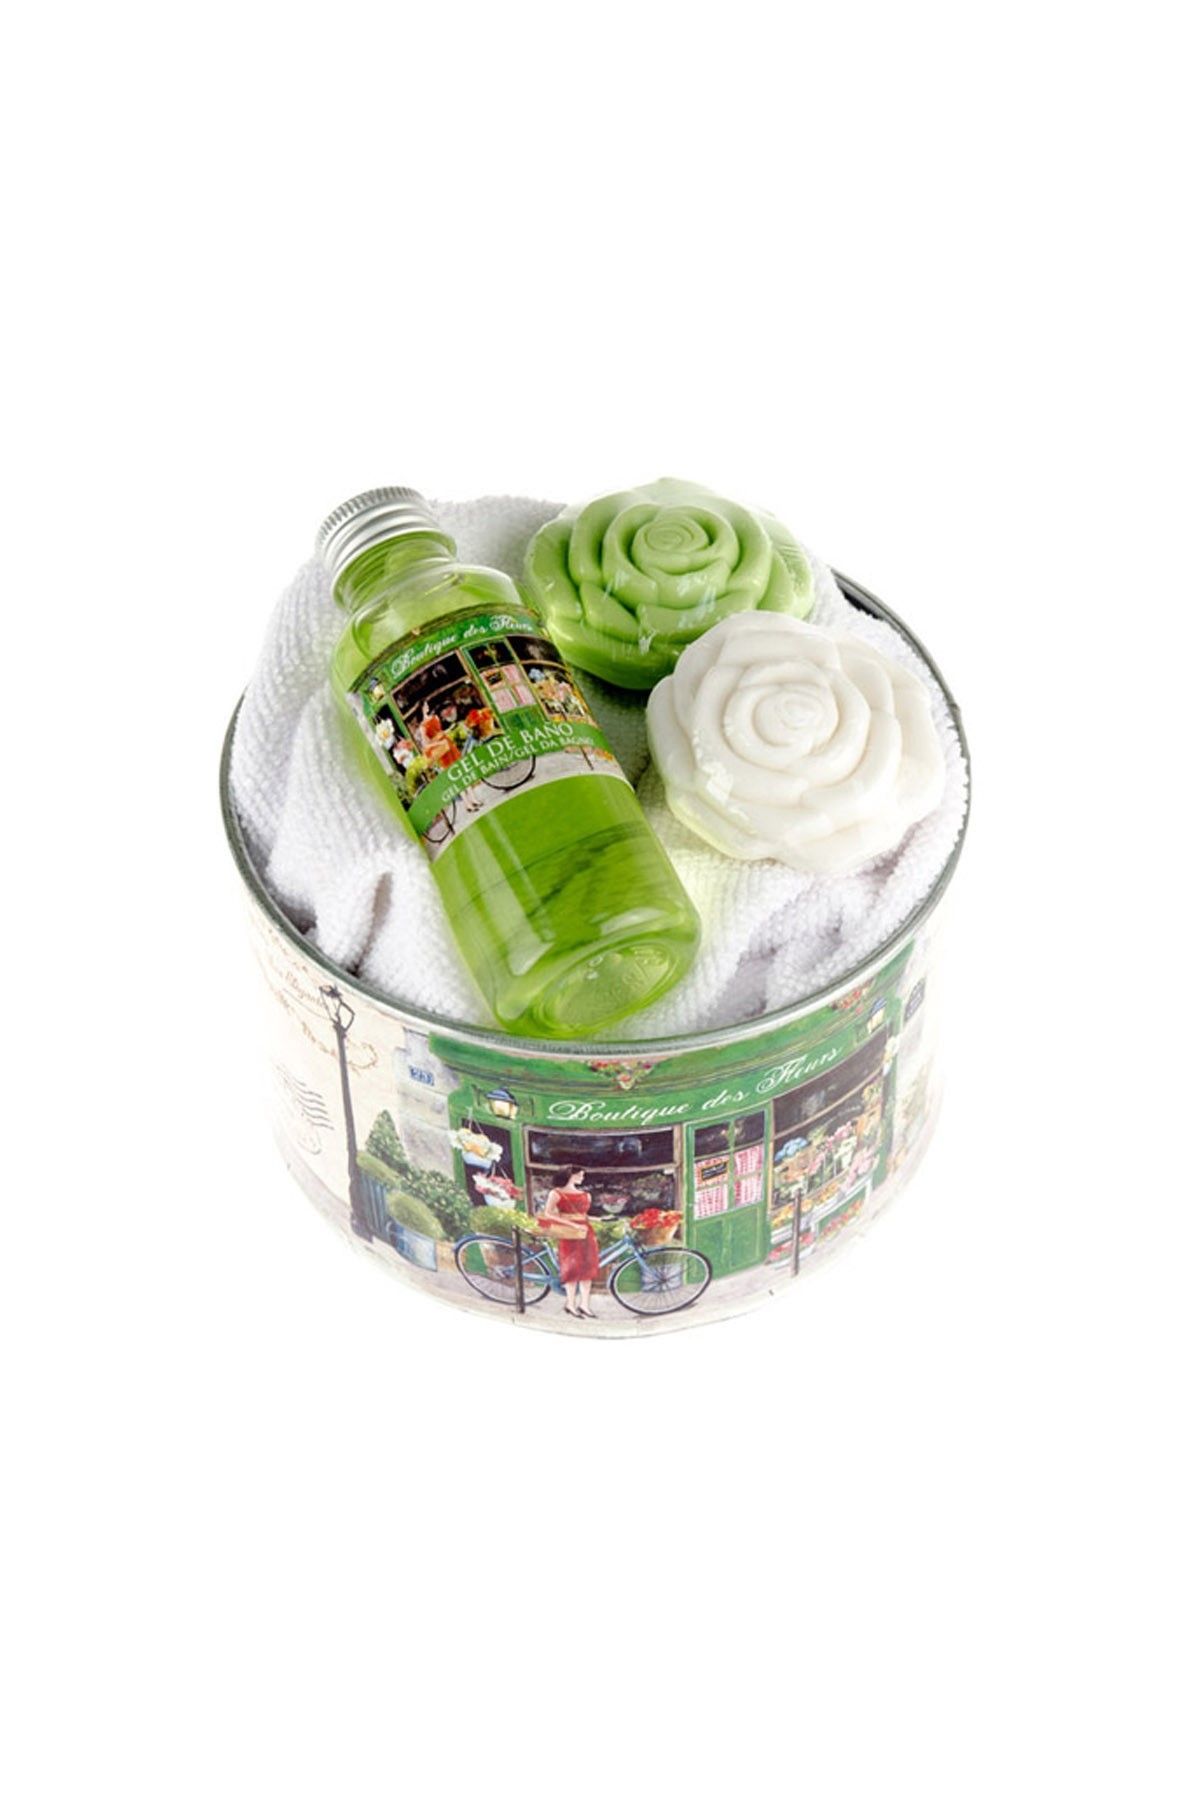 Flor De Mayo Flower Shop Hediye Seti - Verbena 5 Parça 8428390115579